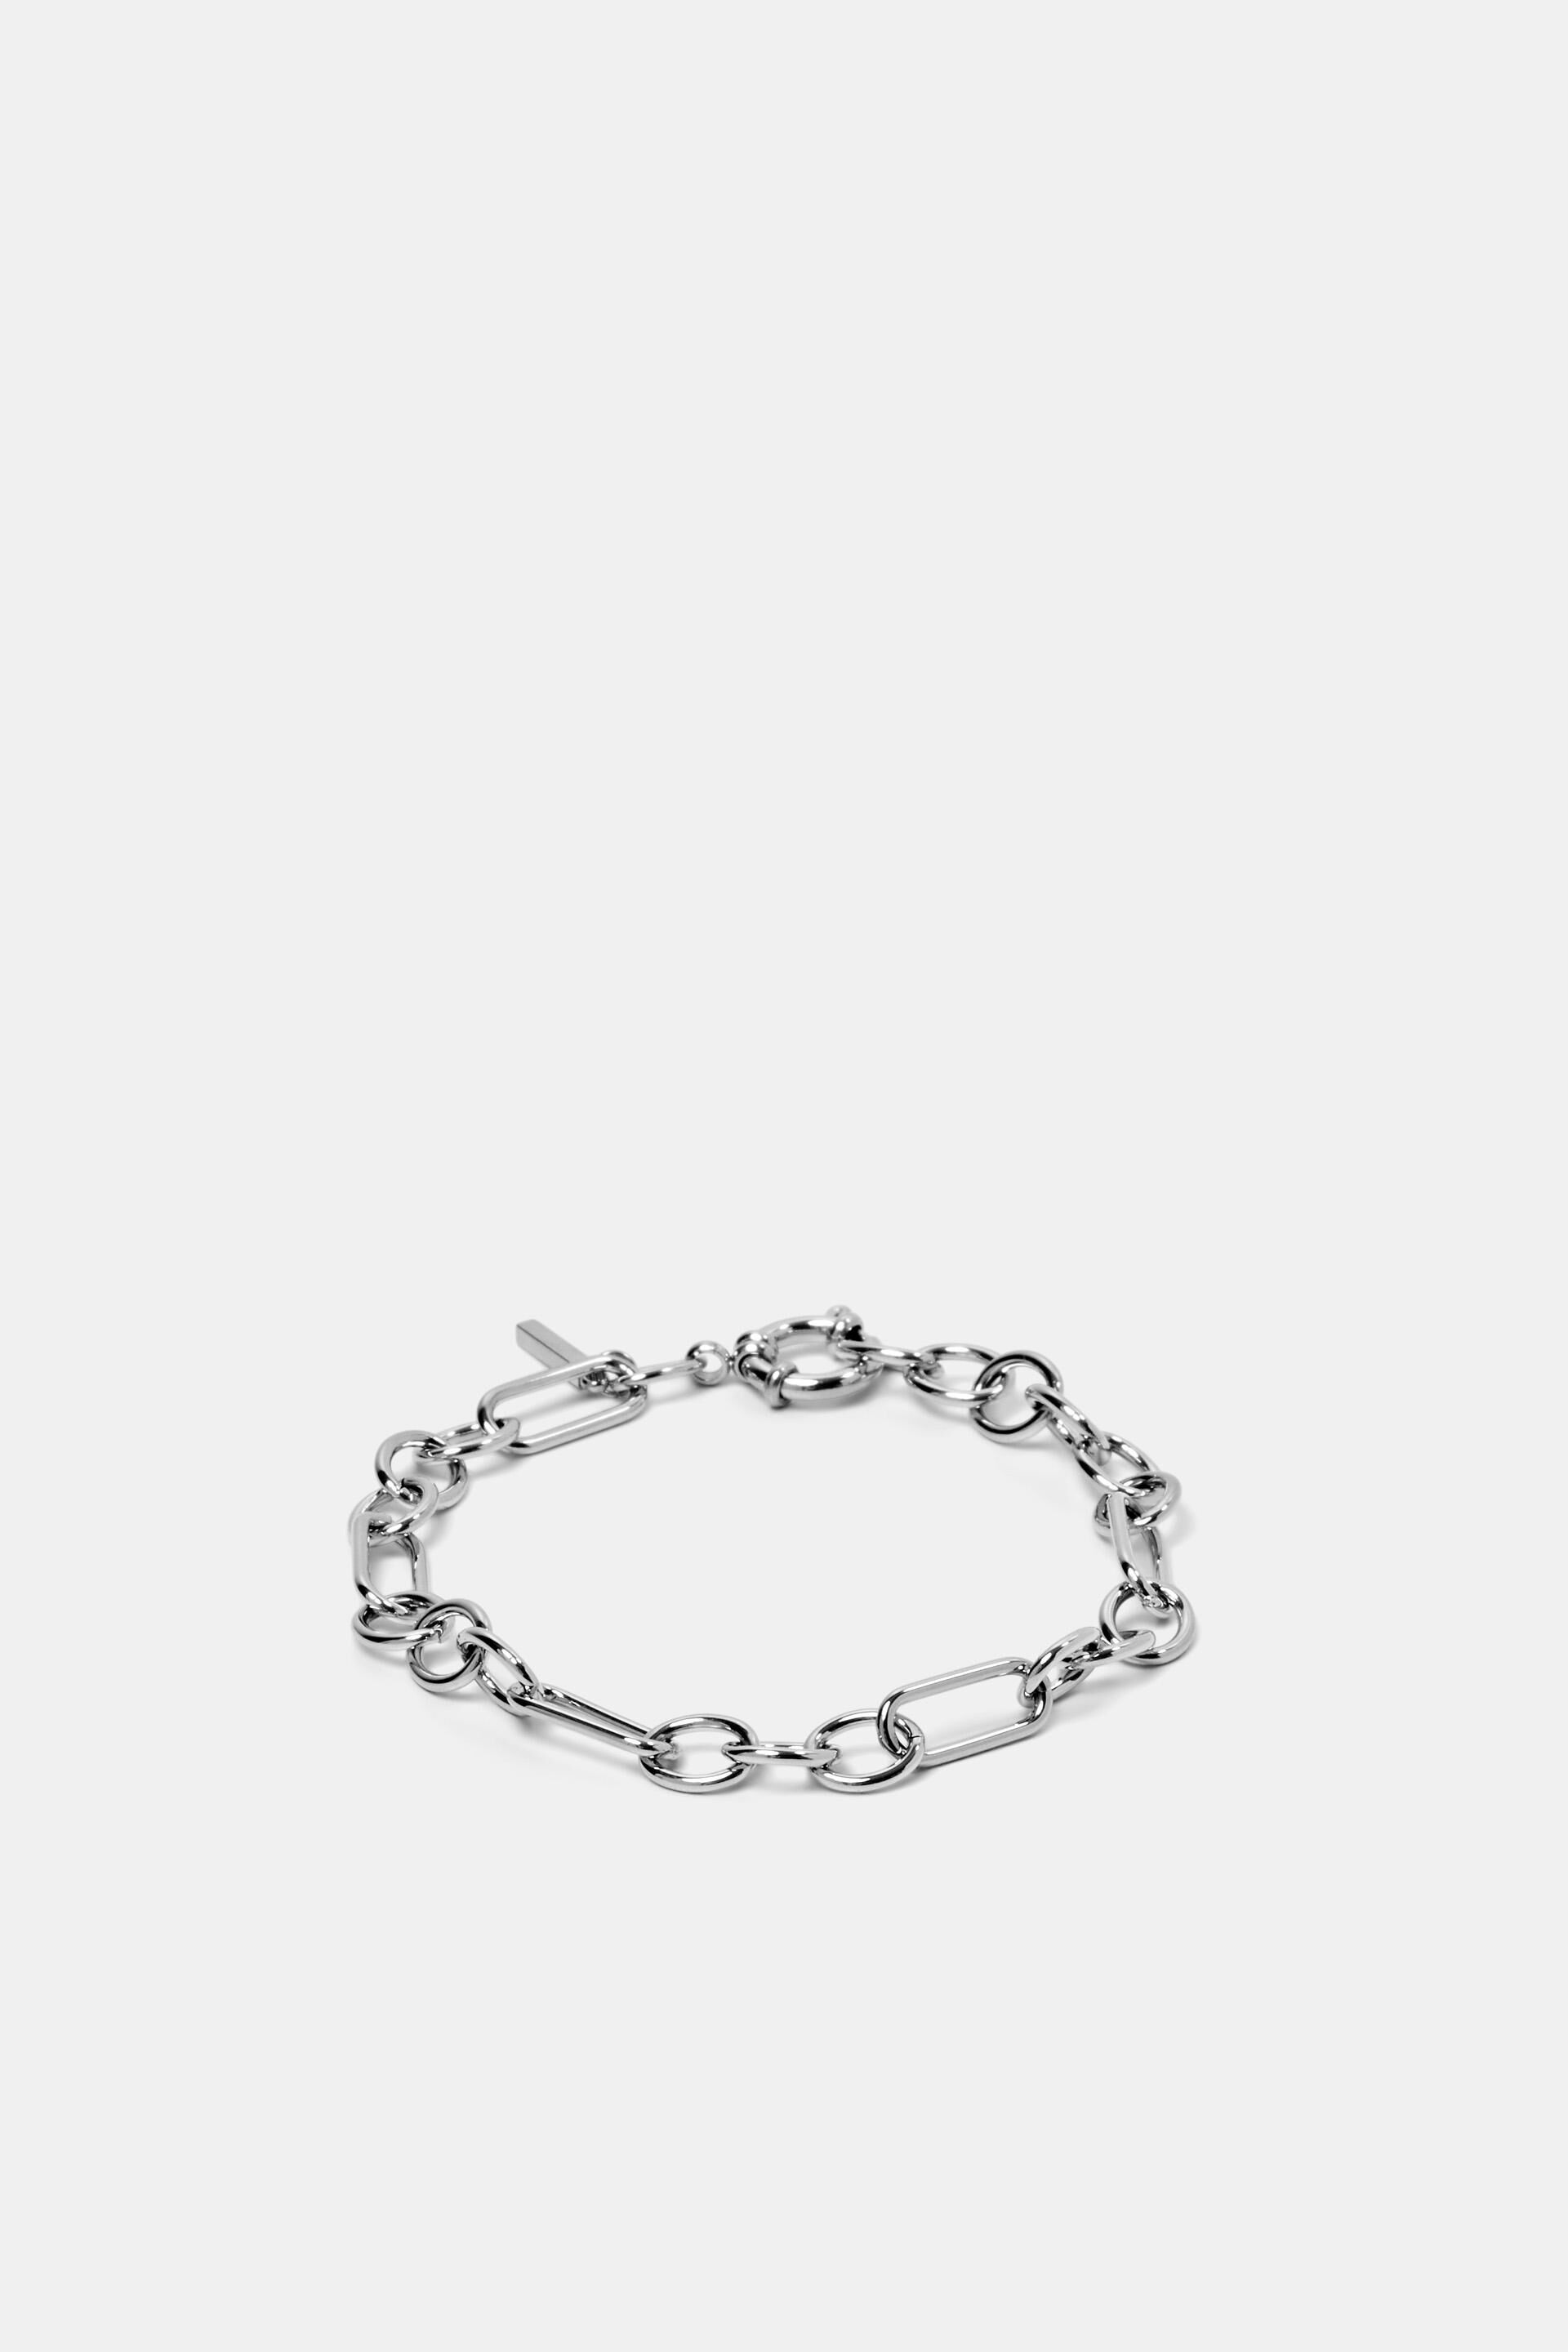 Esprit stainless bracelet, steel Link